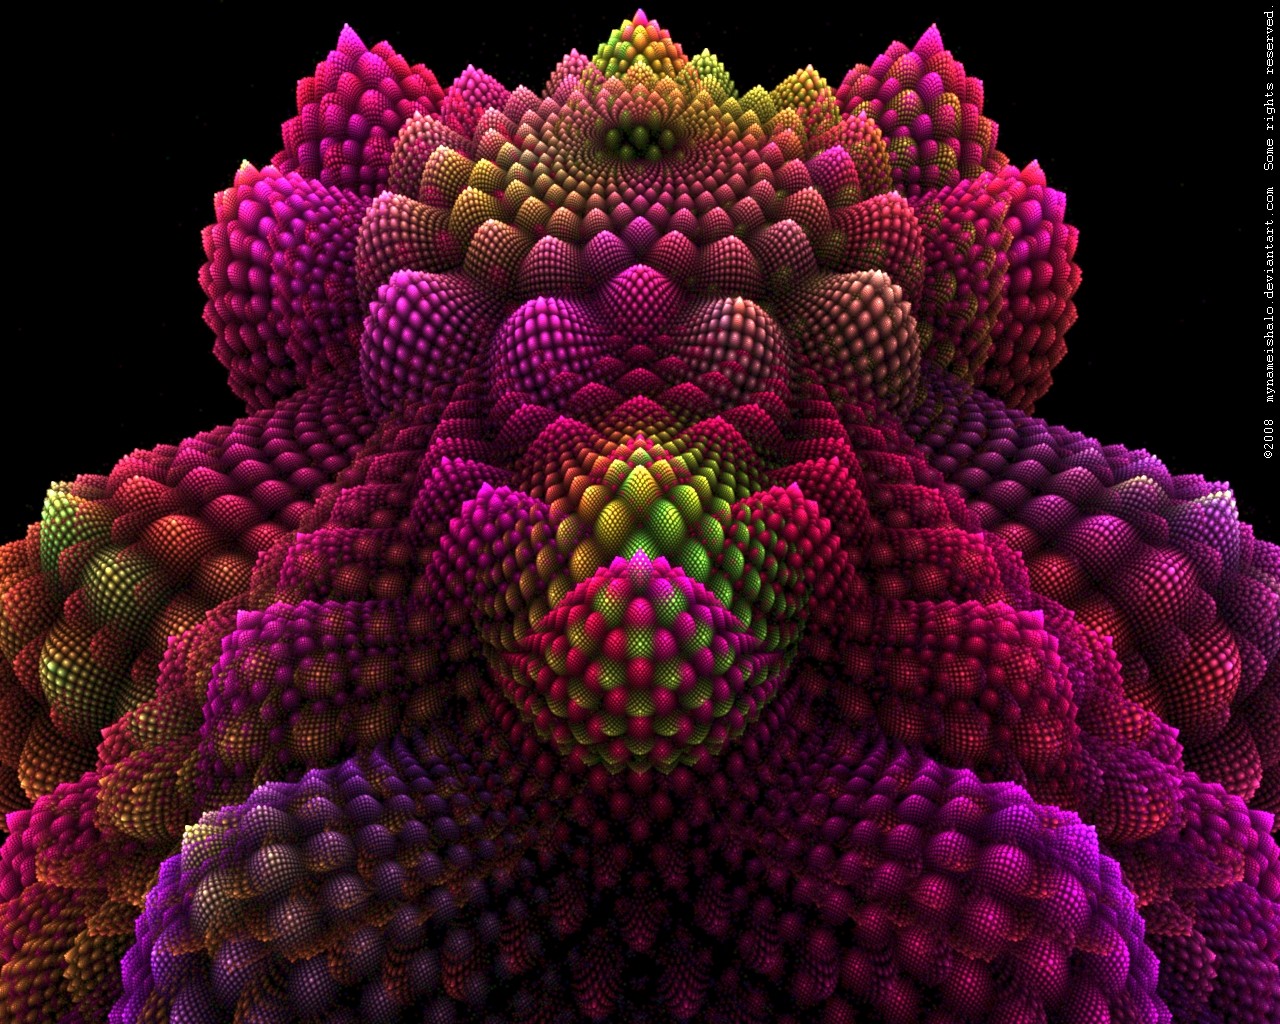 General 1280x1024 abstract psychedelic 2008 (Year) digital art CGI